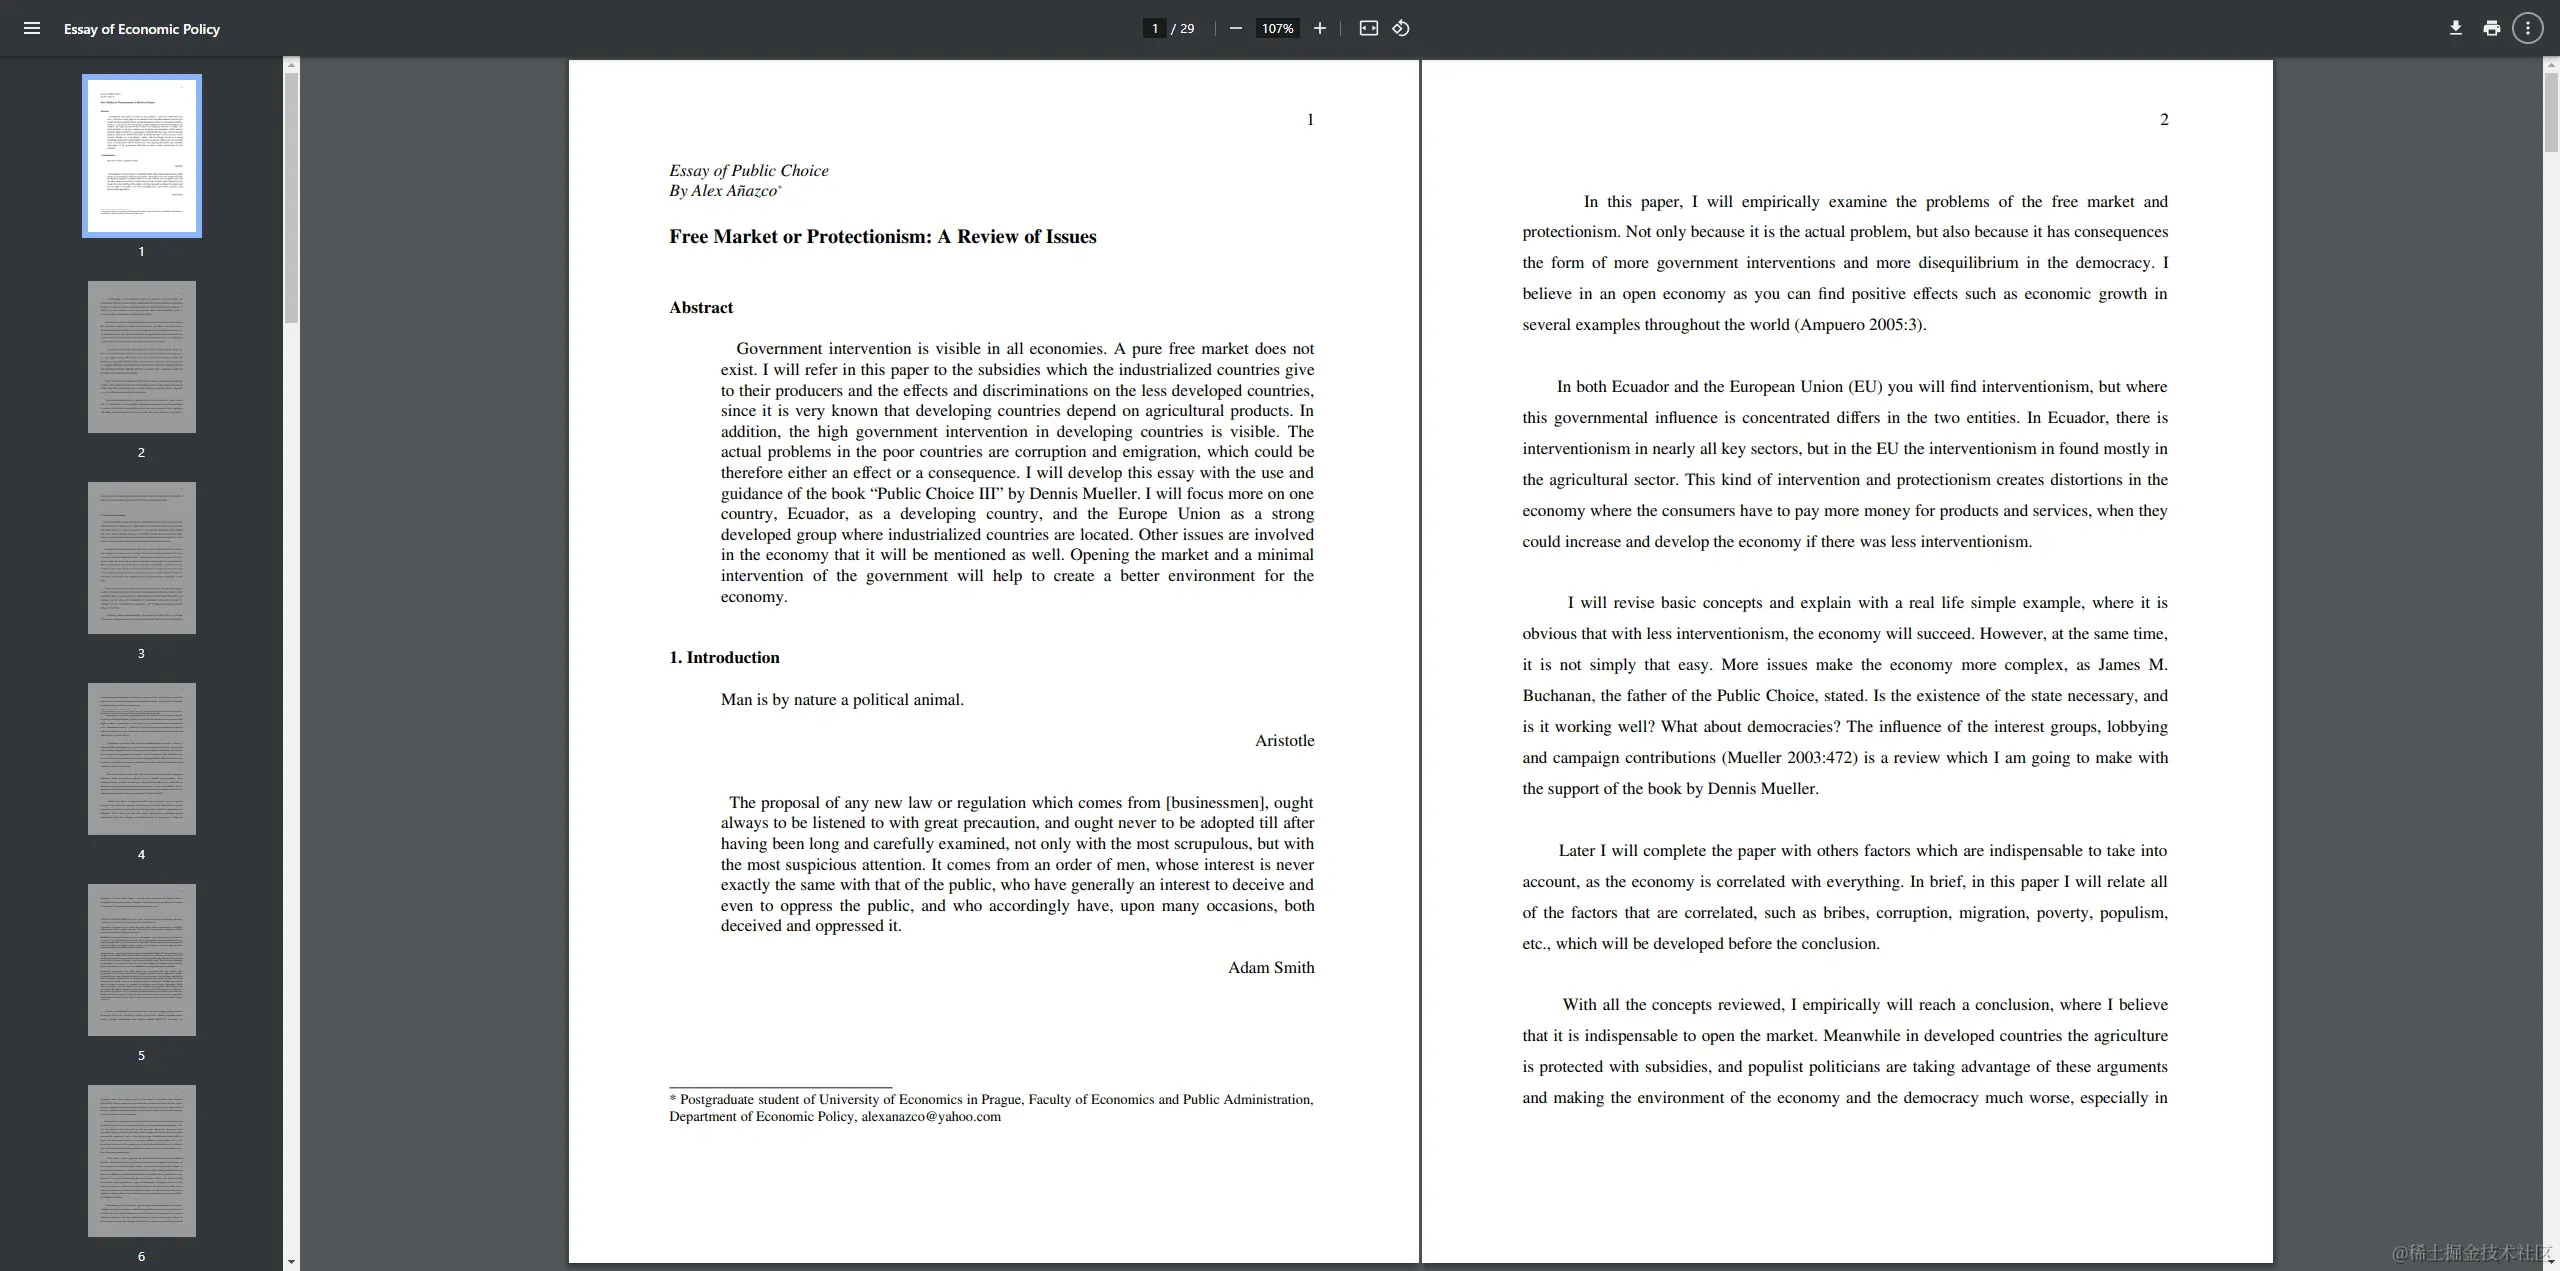 pdf-document-converted